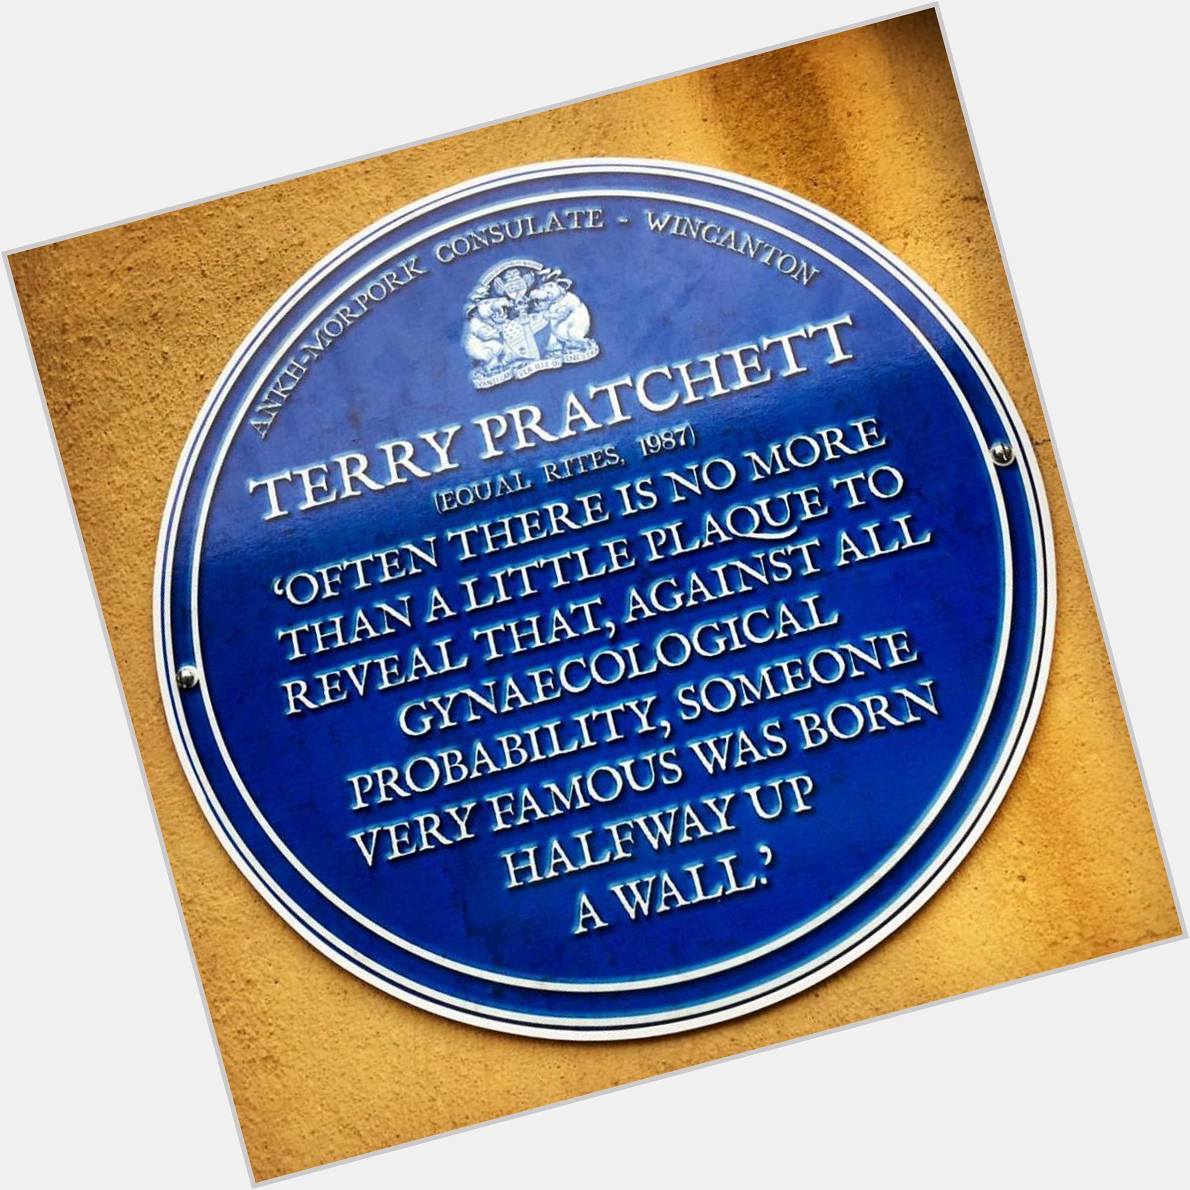 Happy 71st birthday, Sir Terry Pratchett. You are missed 